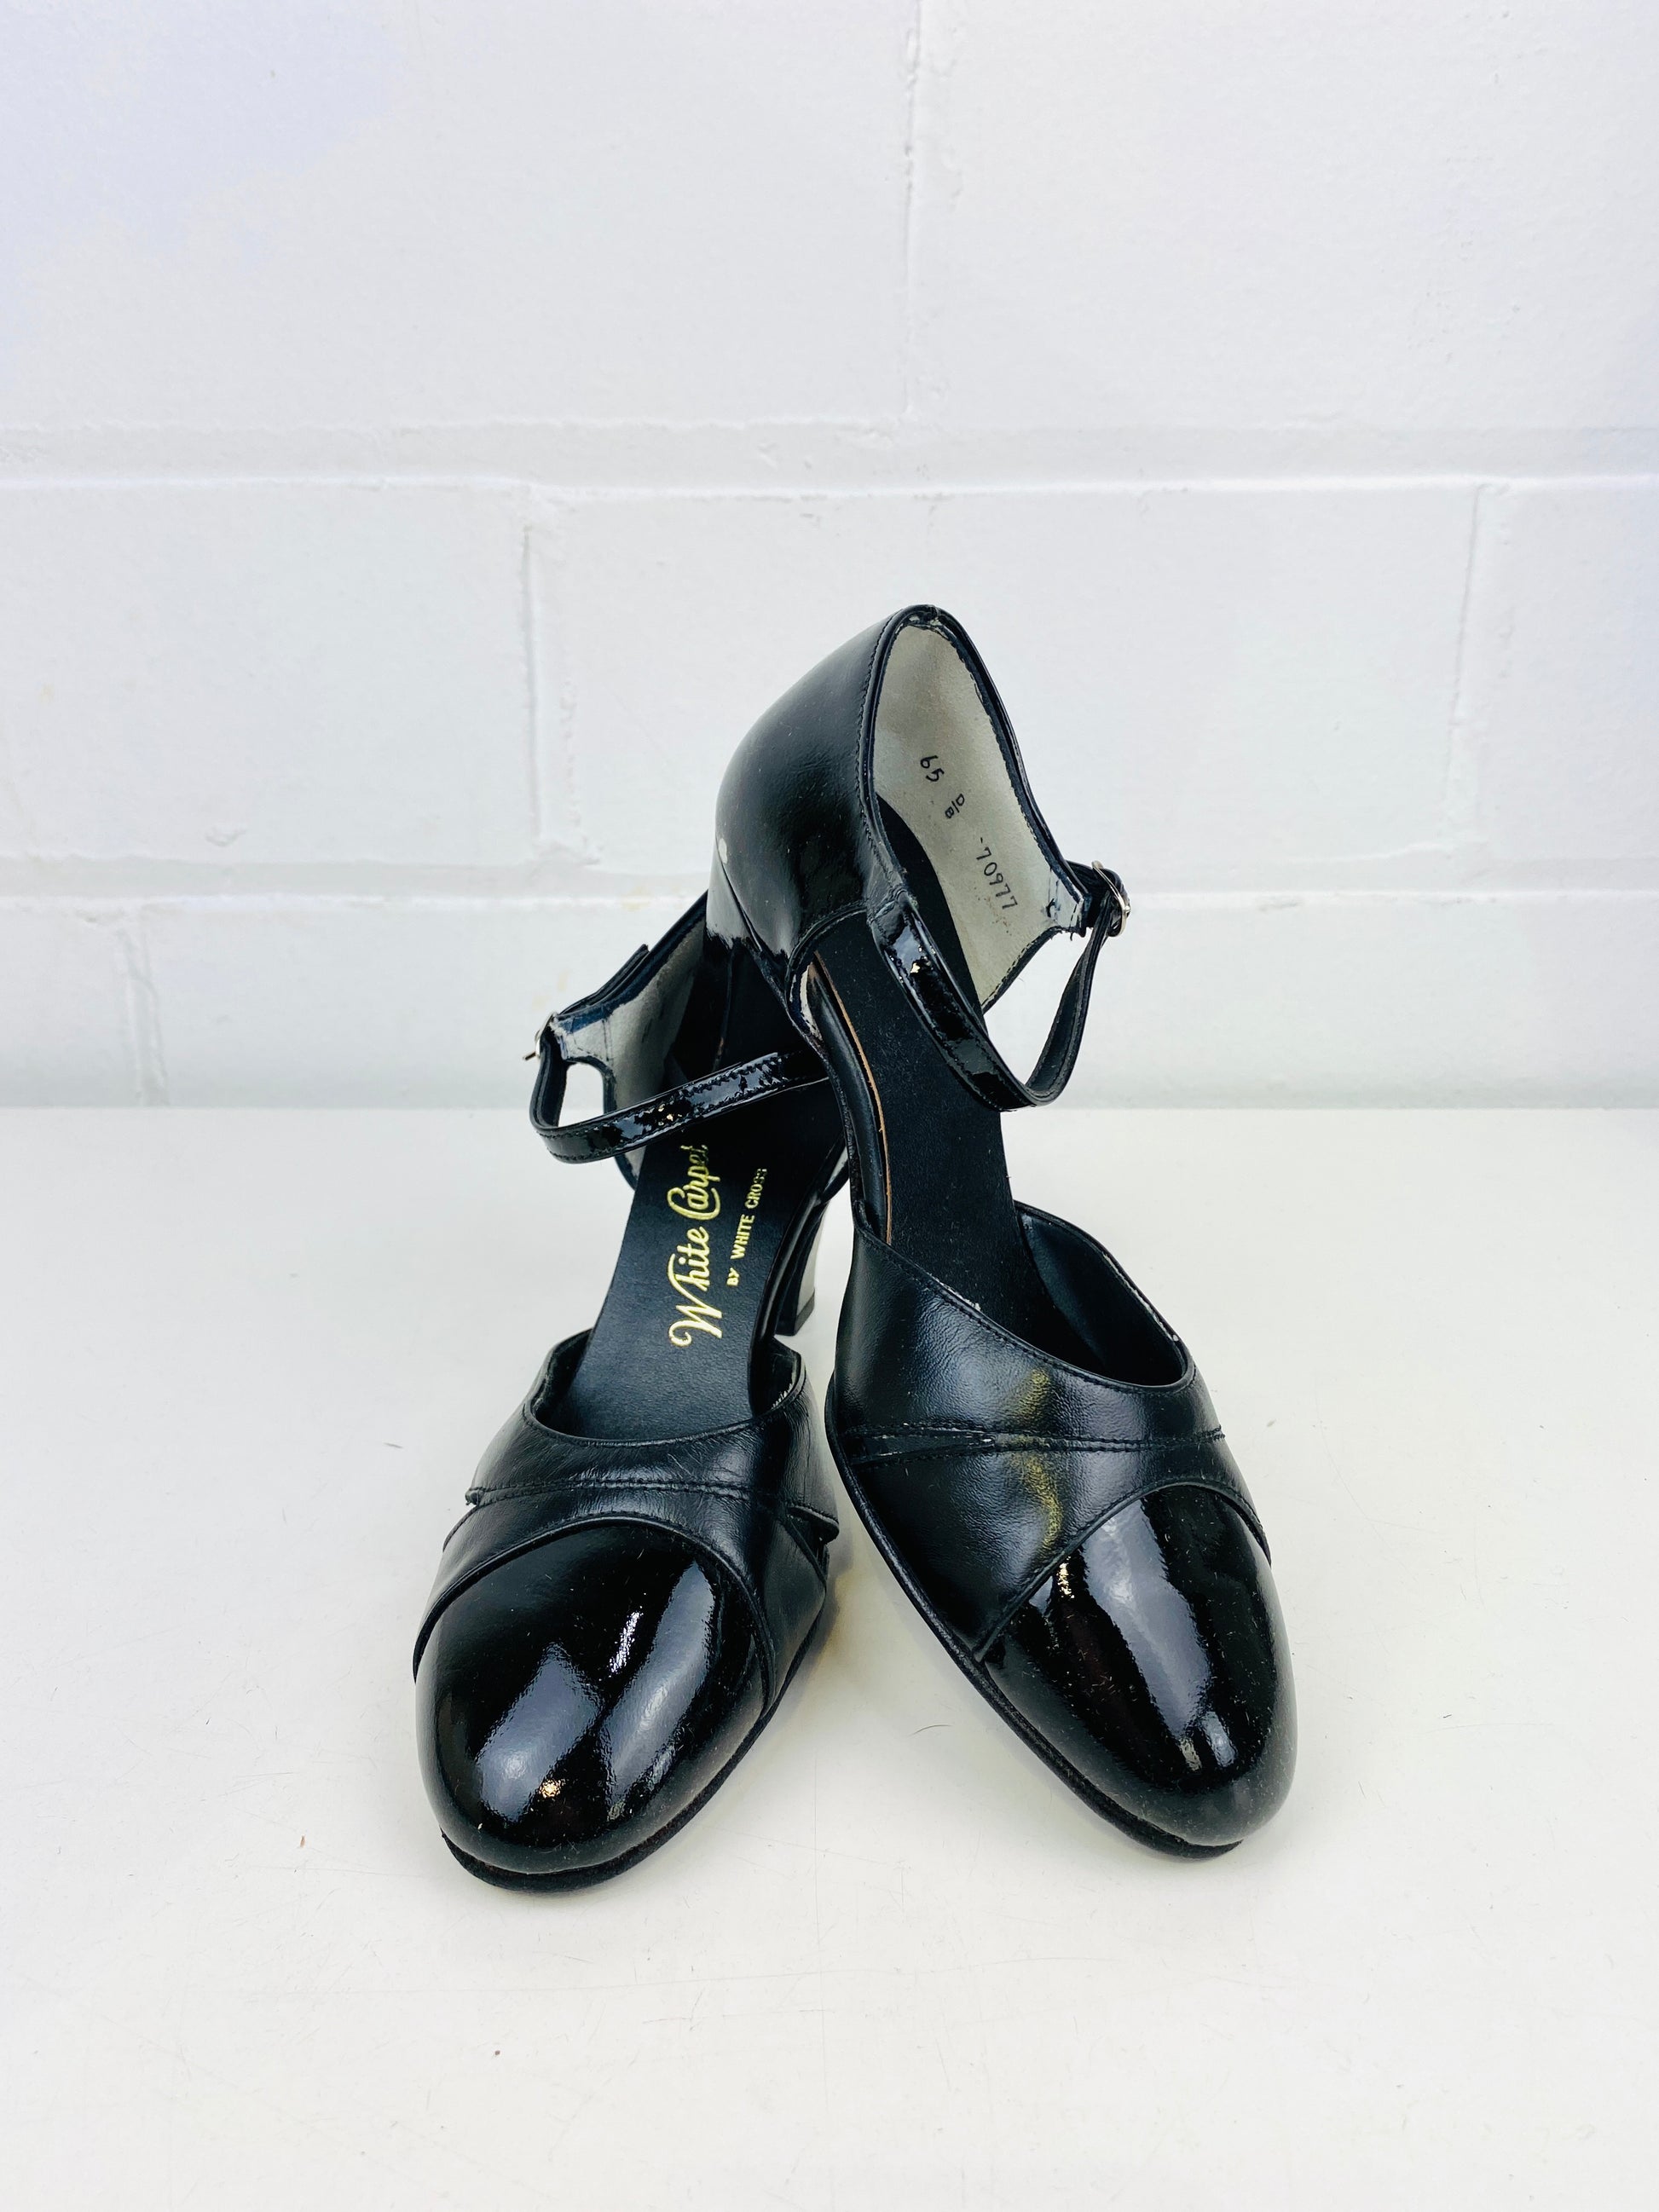 Vintage Deadstock Shoes, Women's 1980s Black Leather Mid-Heel Sandals, NOS, 7489